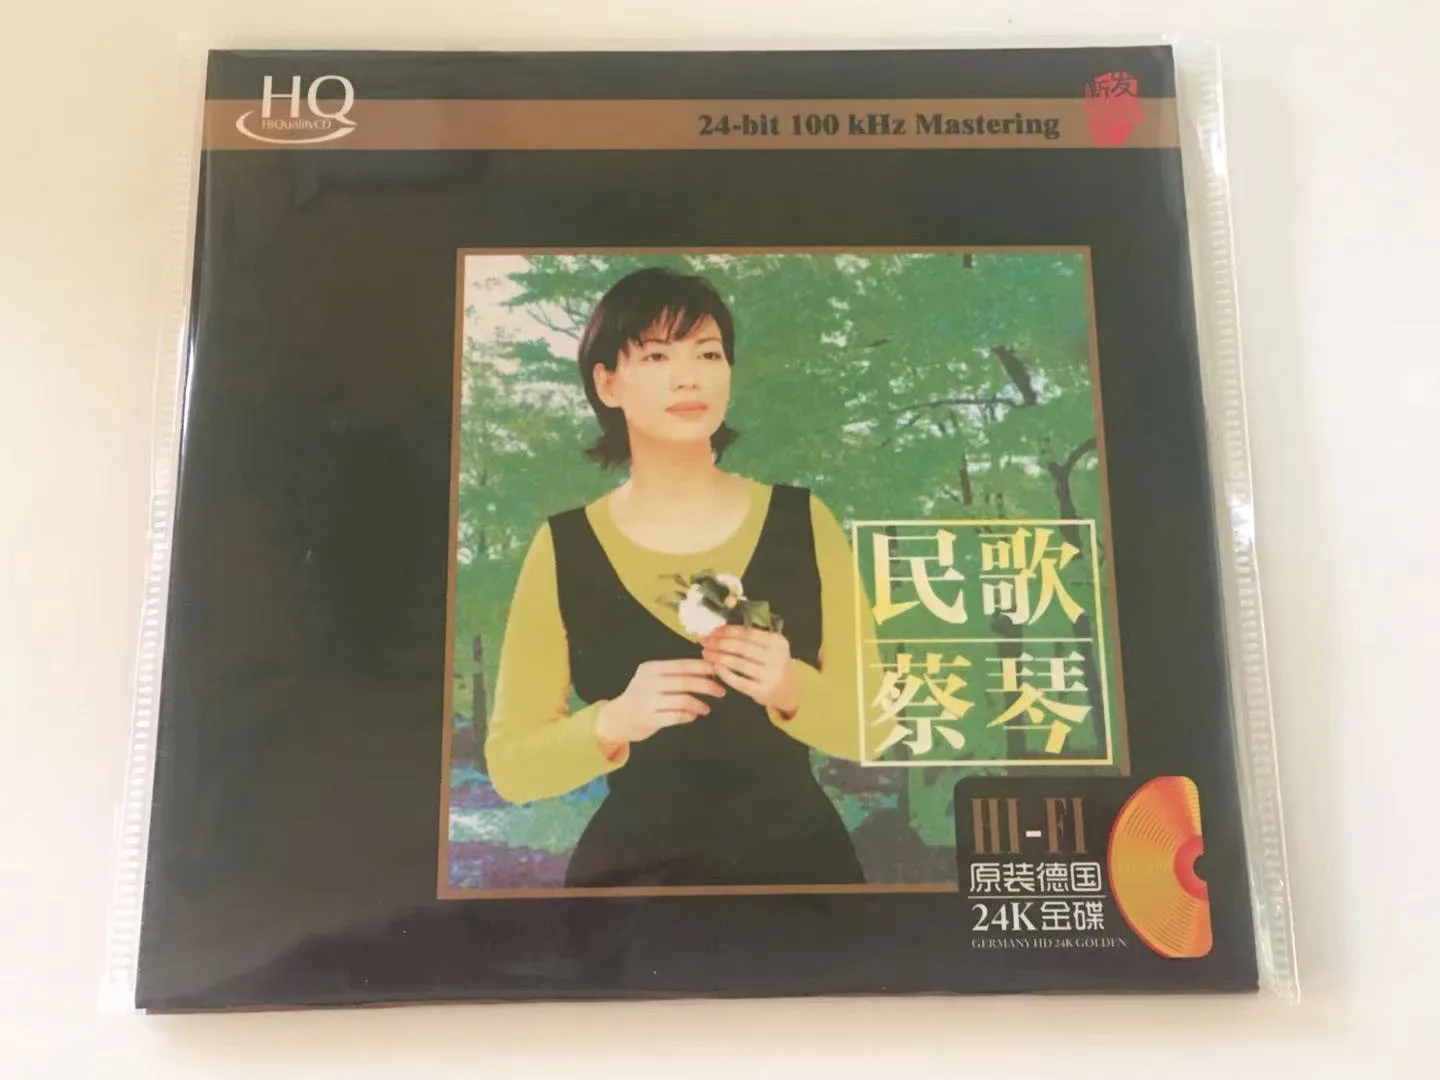 

Original China High Quality HQ K2HD 1 CD Disc Set Chinese Classic Pop Music Singer Cai Qin Tsai Chin 12 Songs Collection